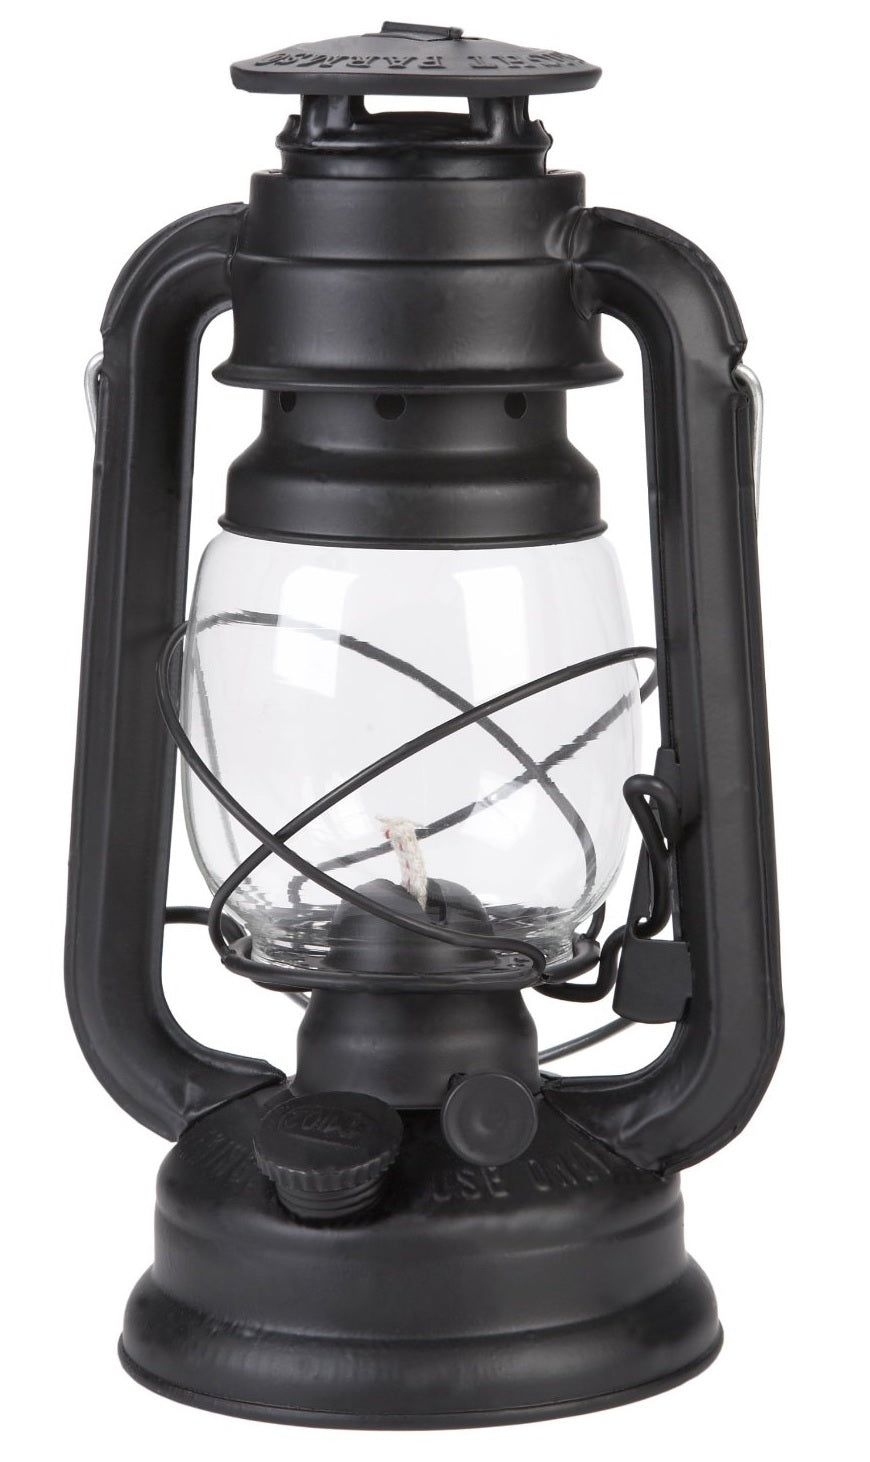 buy lanterns & emergency lighting at cheap rate in bulk. wholesale & retail household emergency lighting store.